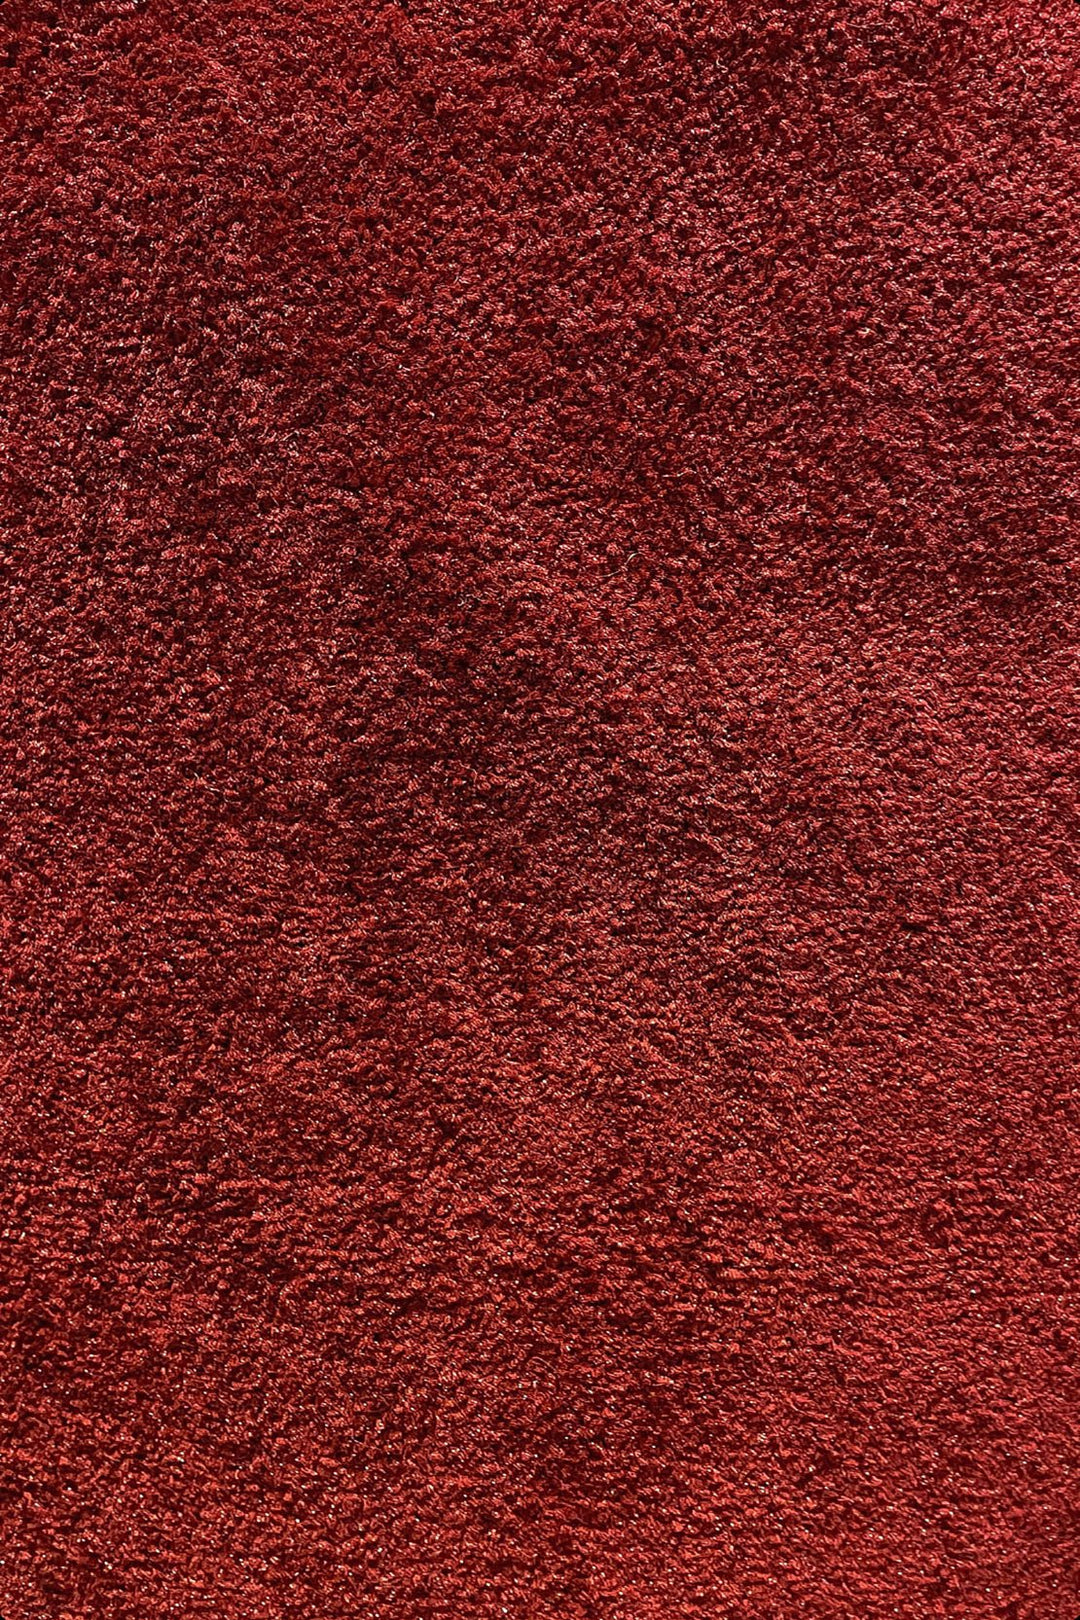 Masqat- 12-Foot Wide Wall-to-Wall Carpet, Maroon - V Surfaces